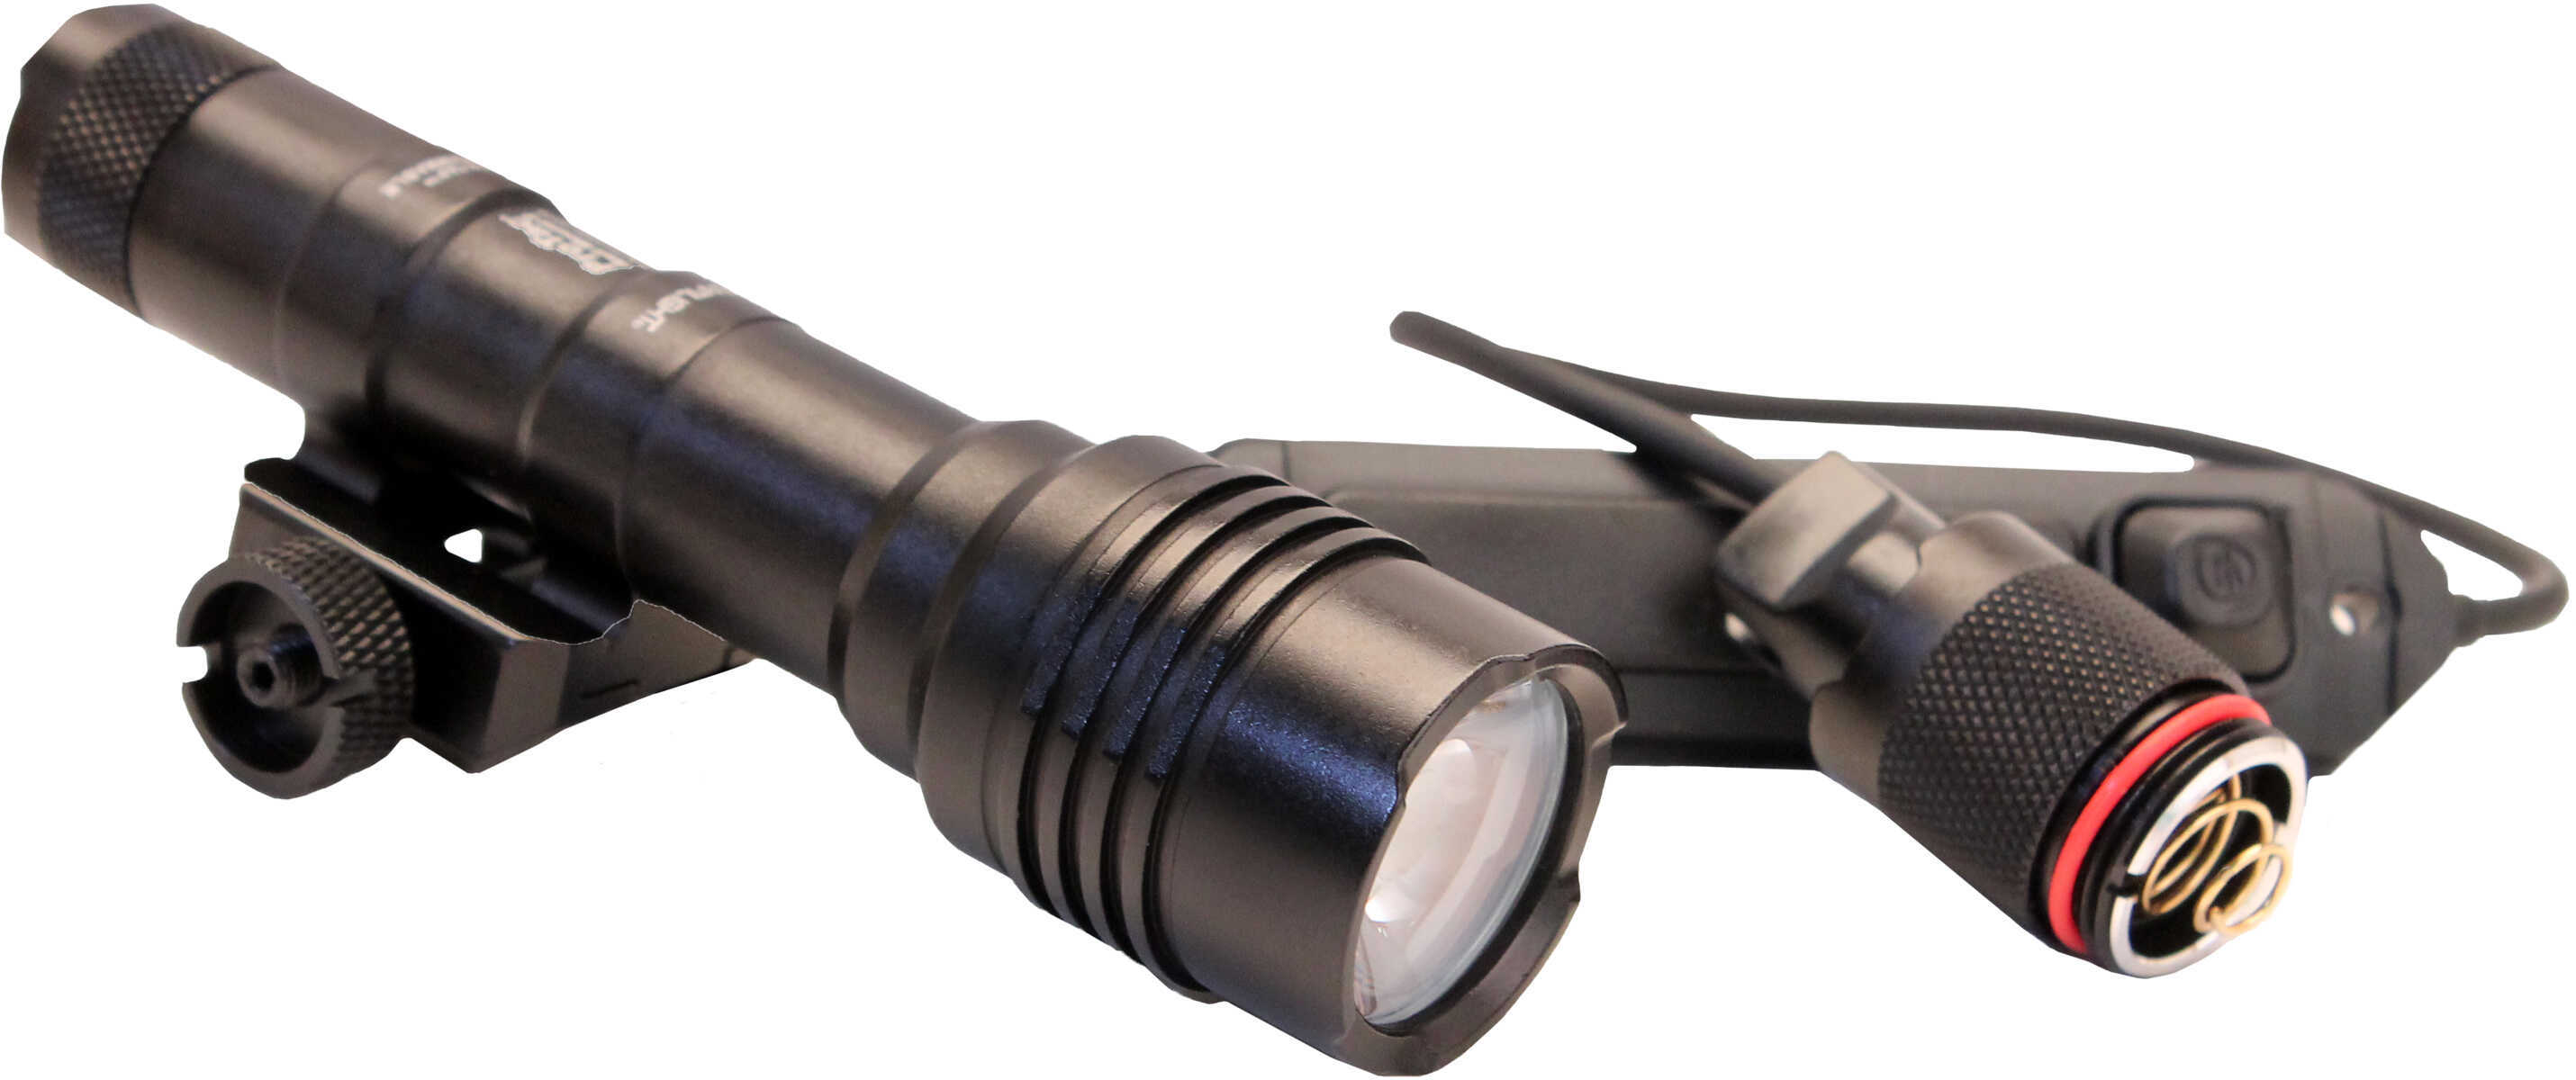 Streamlight Protac Rail Mount 2 Weapon Light Black 625 Lumens with Pressure Switch Model: 88059